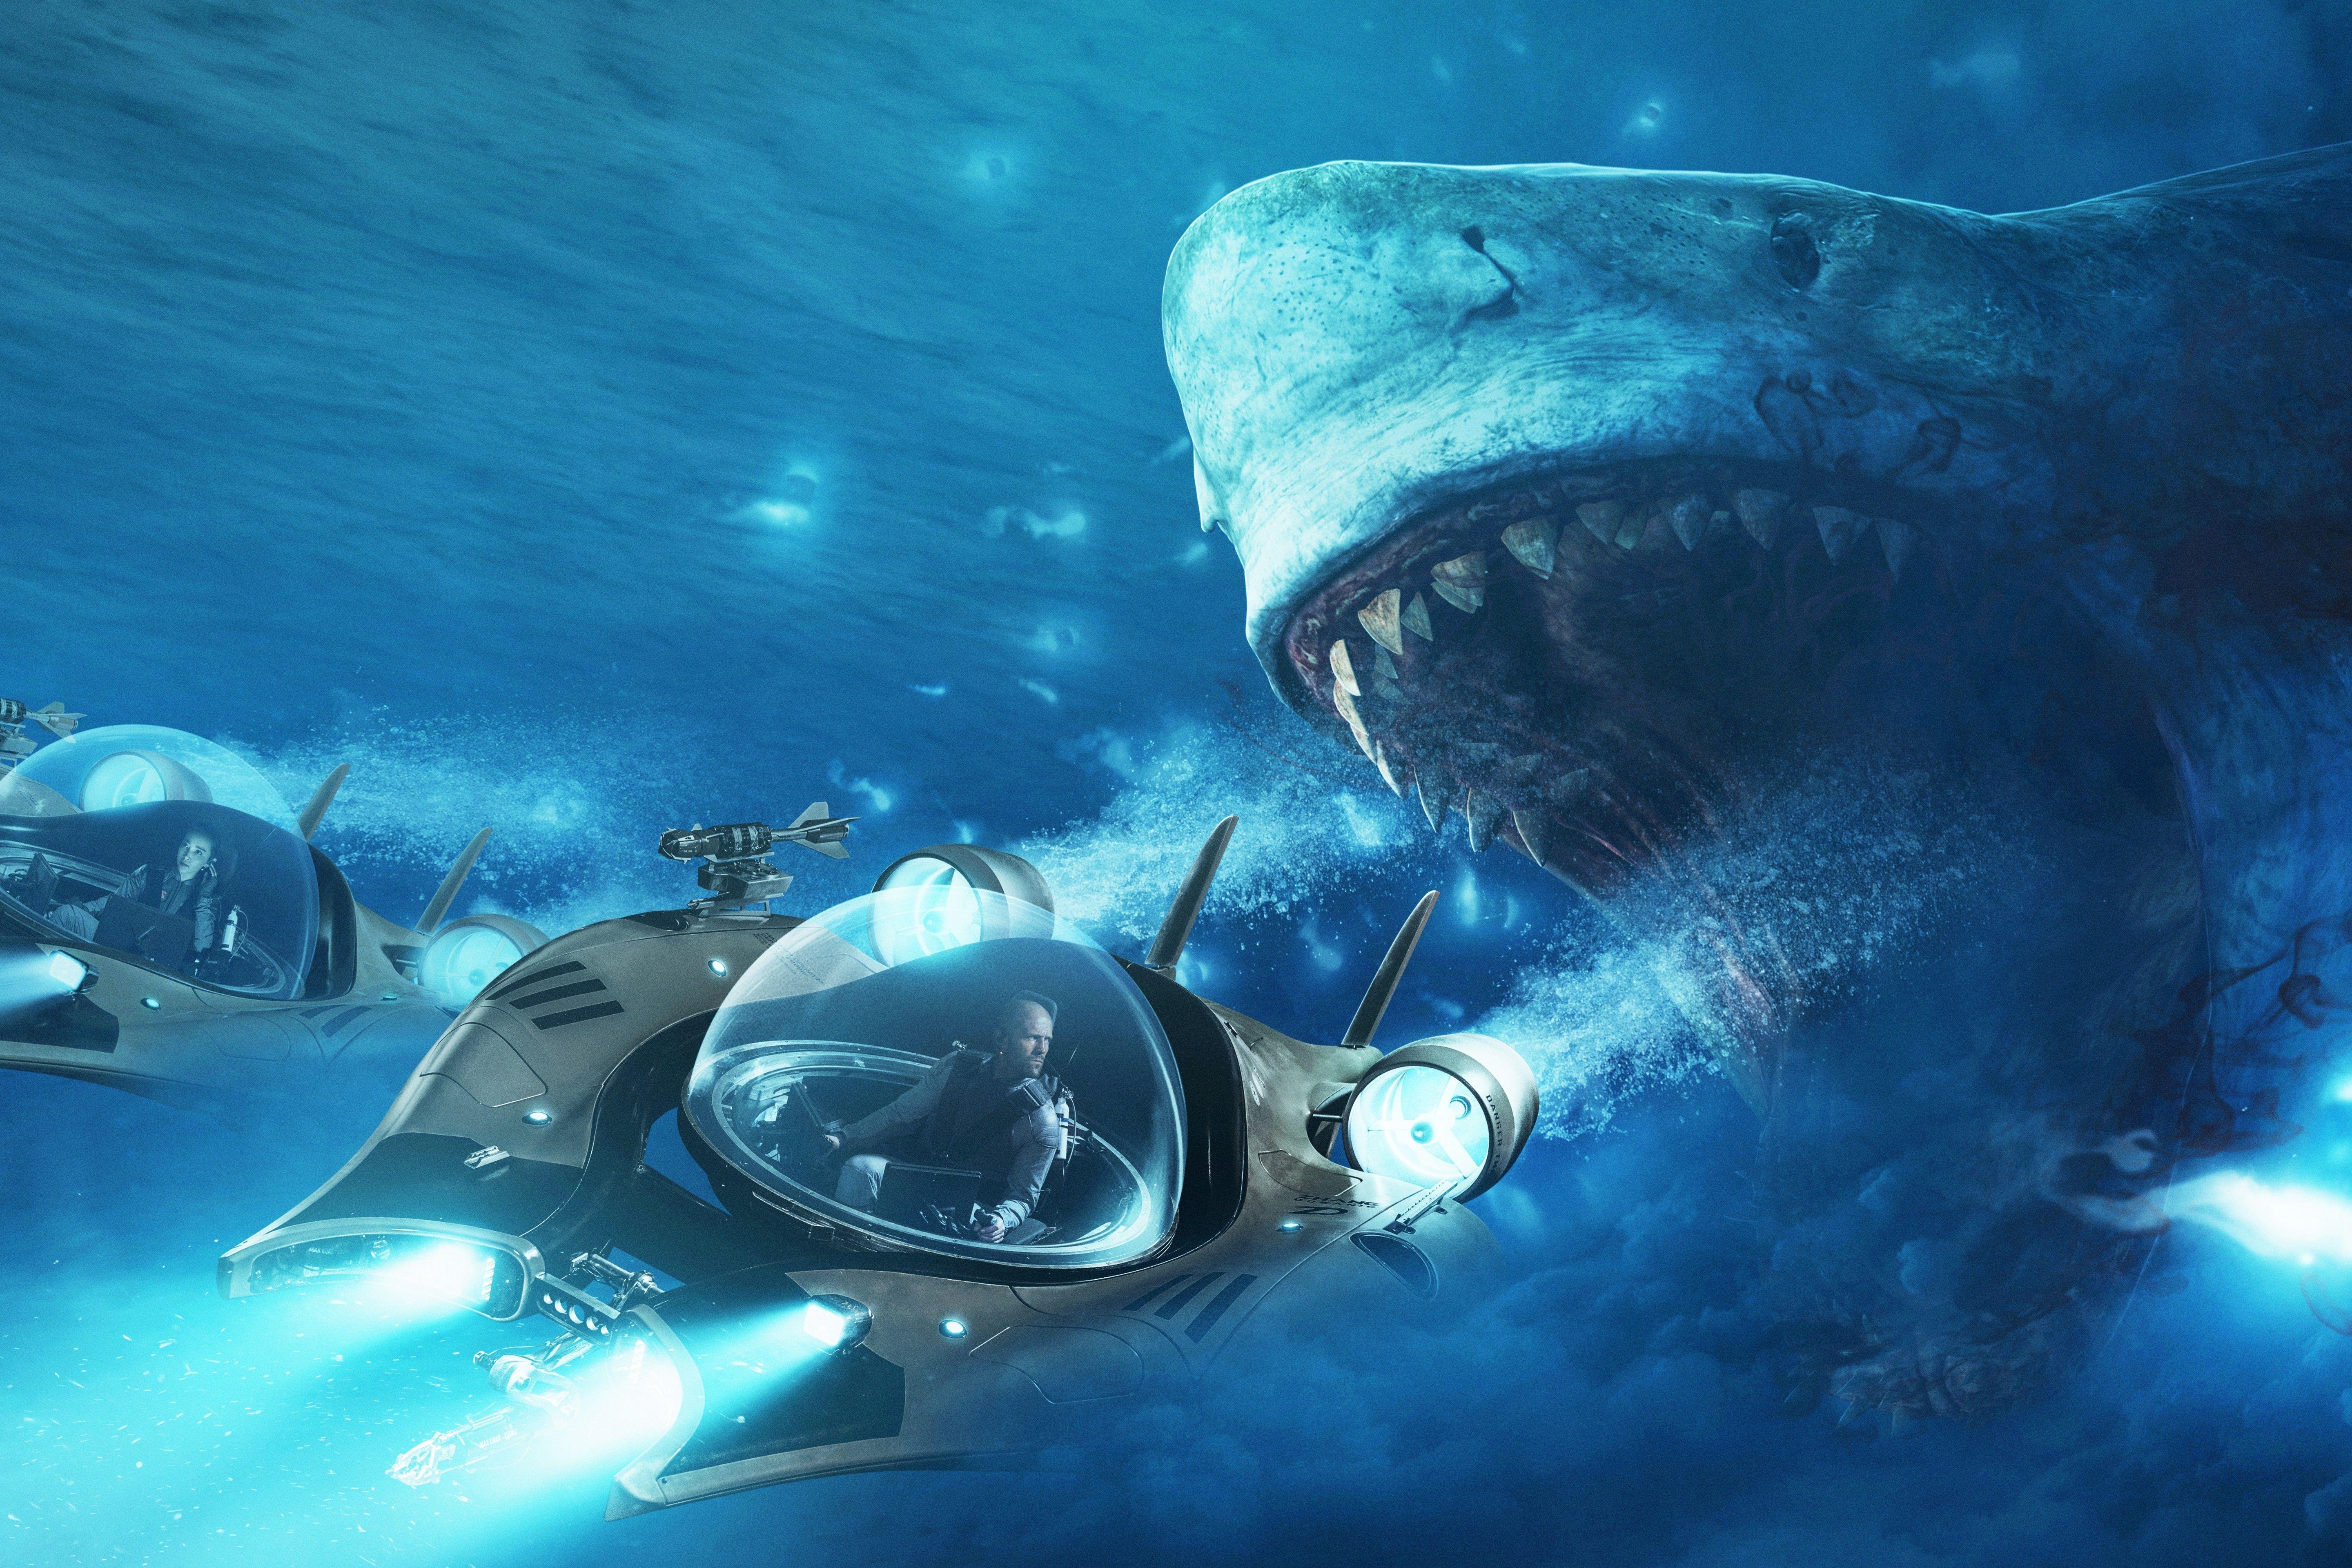 Download 5760x3840 The Meg Jason Statham, Shark Attack